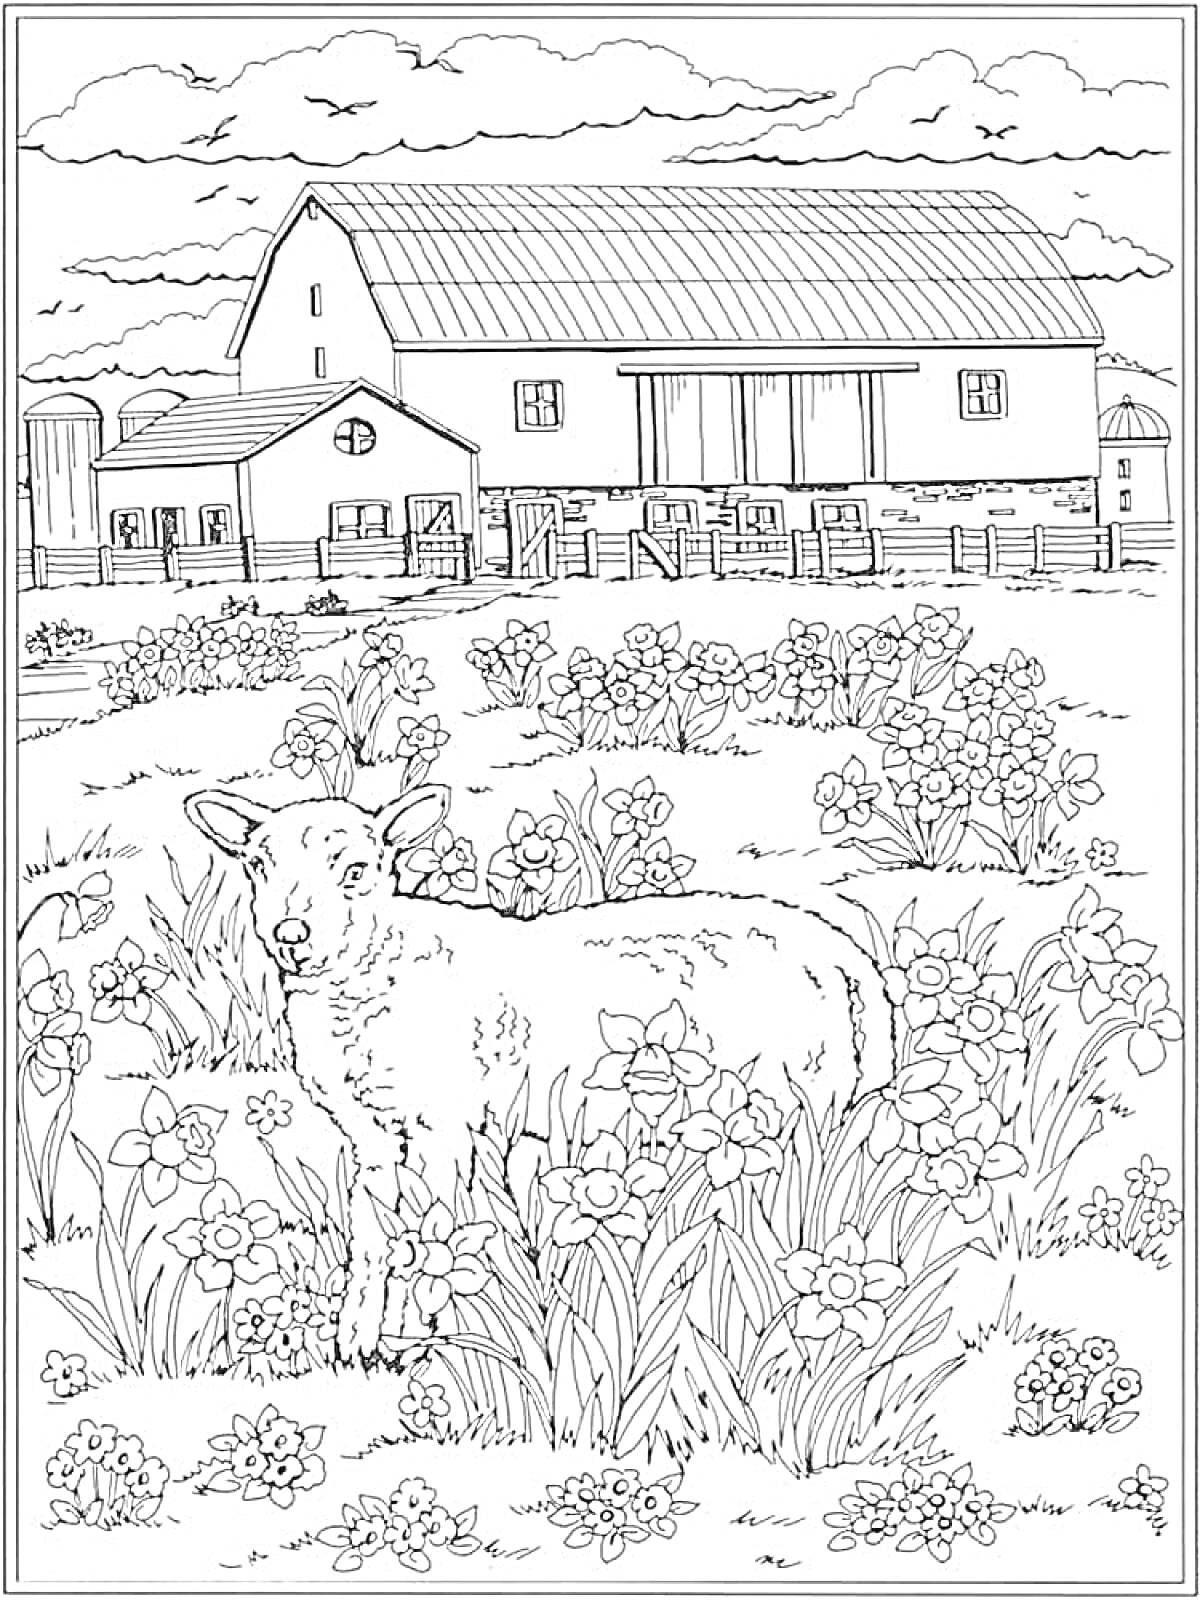 Овца на пастбище перед фермерским домом и цветами